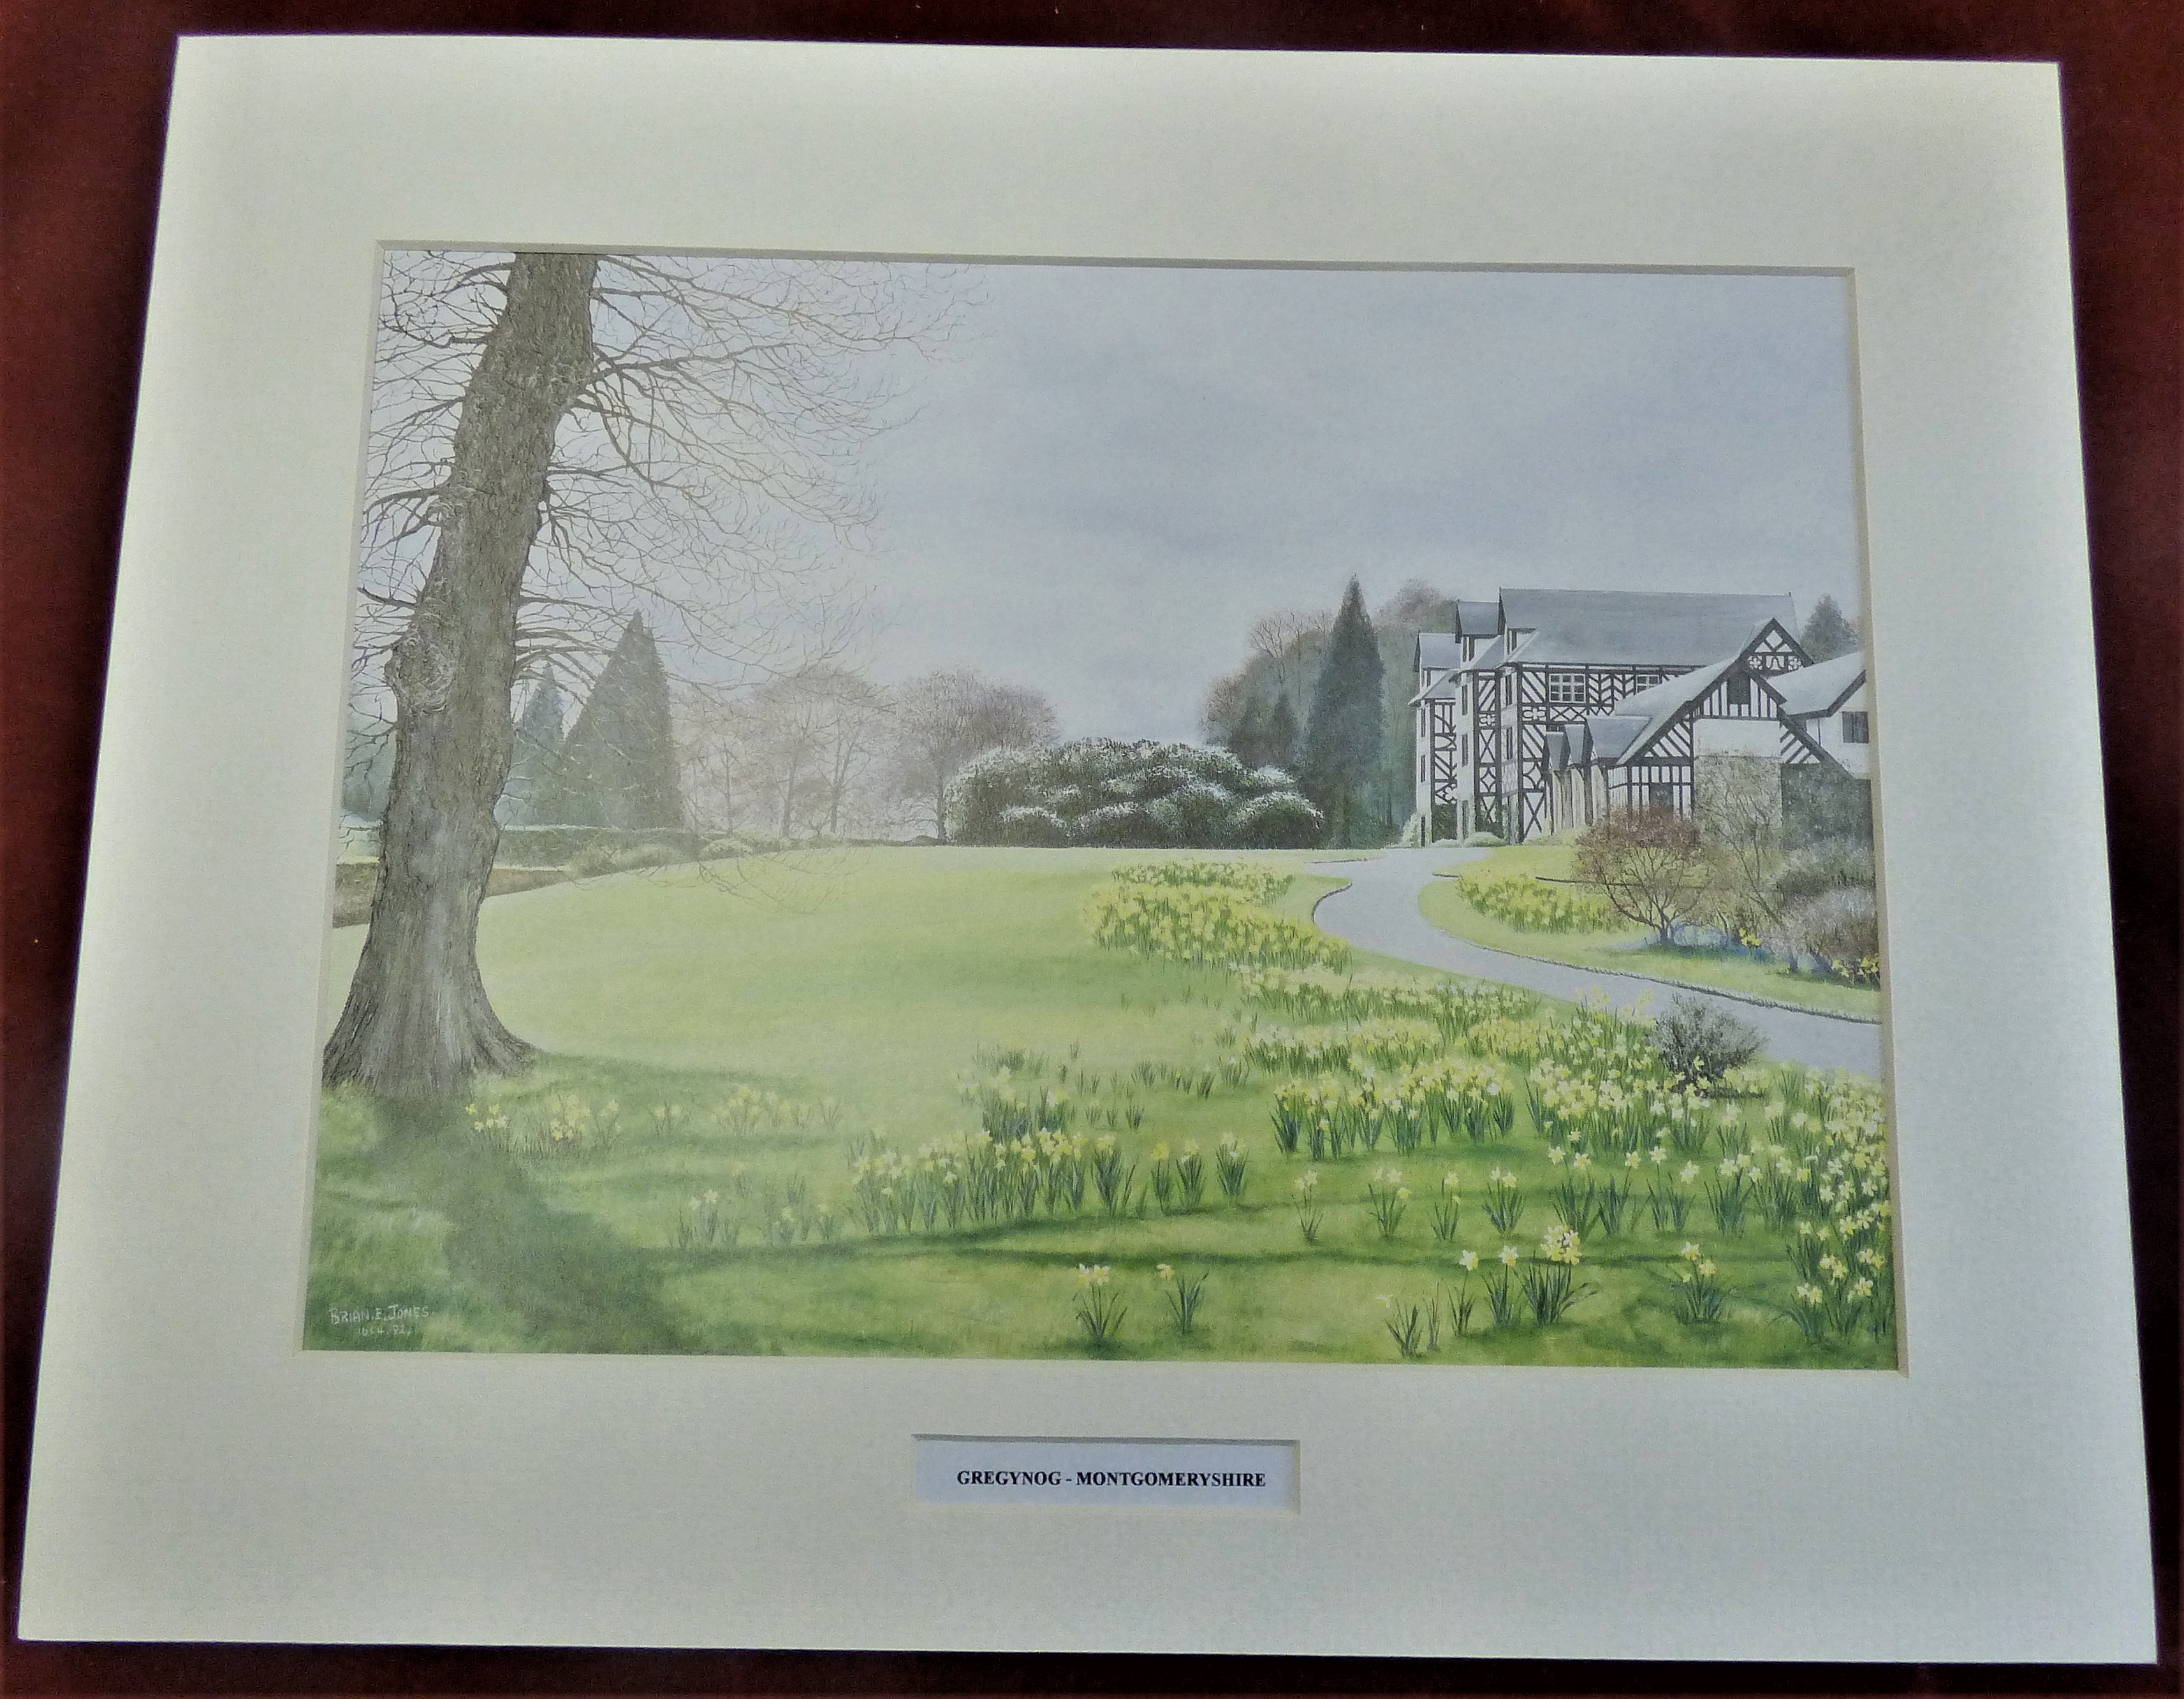 Gregynog-Montgomeryshire print of a watercolour piece by Brian E. Jones 16/4/92. A beautiful print